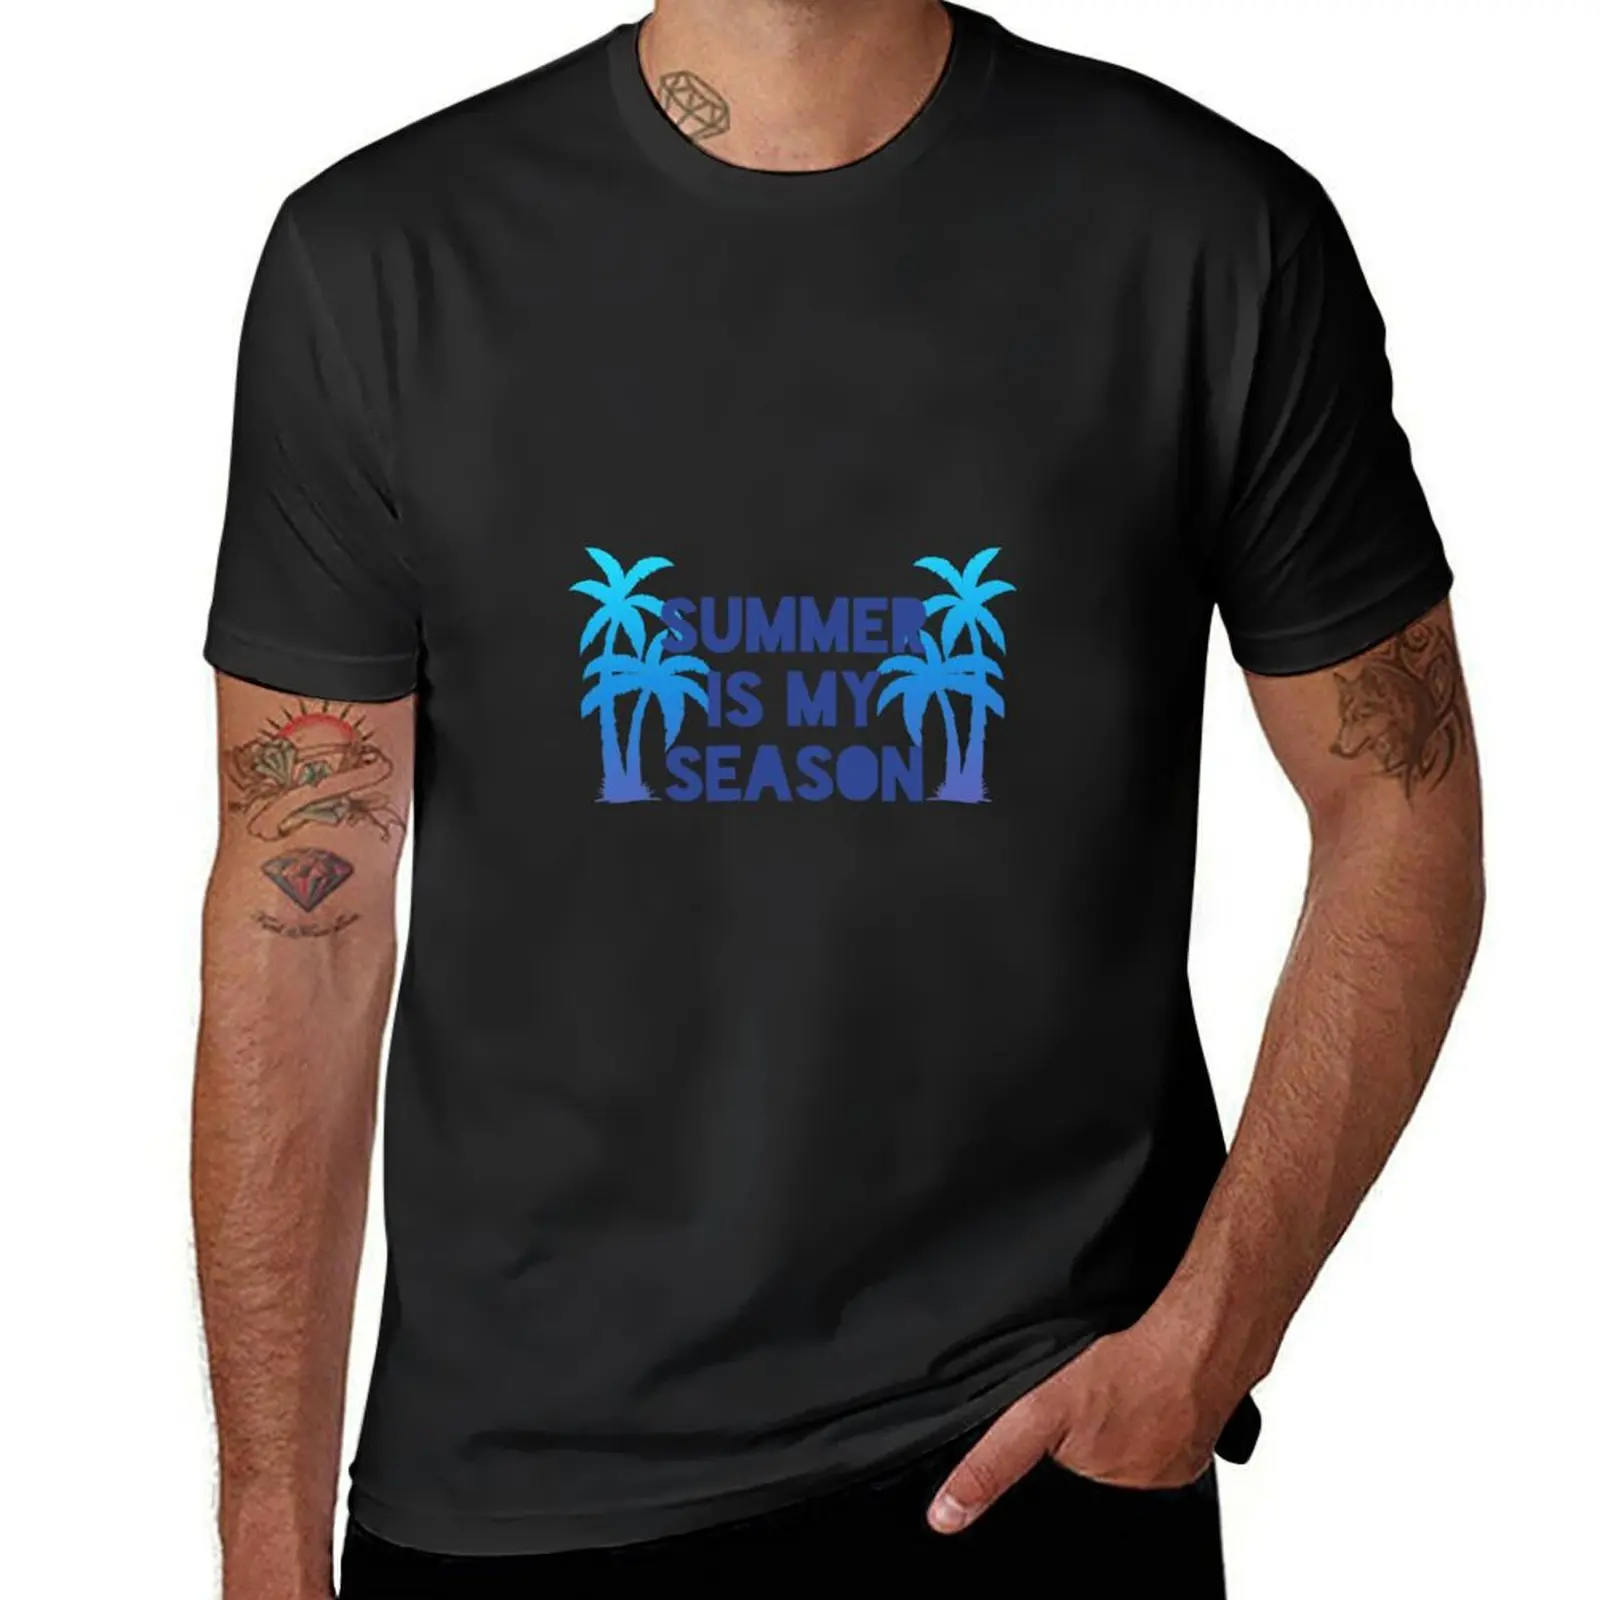 

Summer is my season T-shirt summer top shirts graphic tees Men's t-shirts